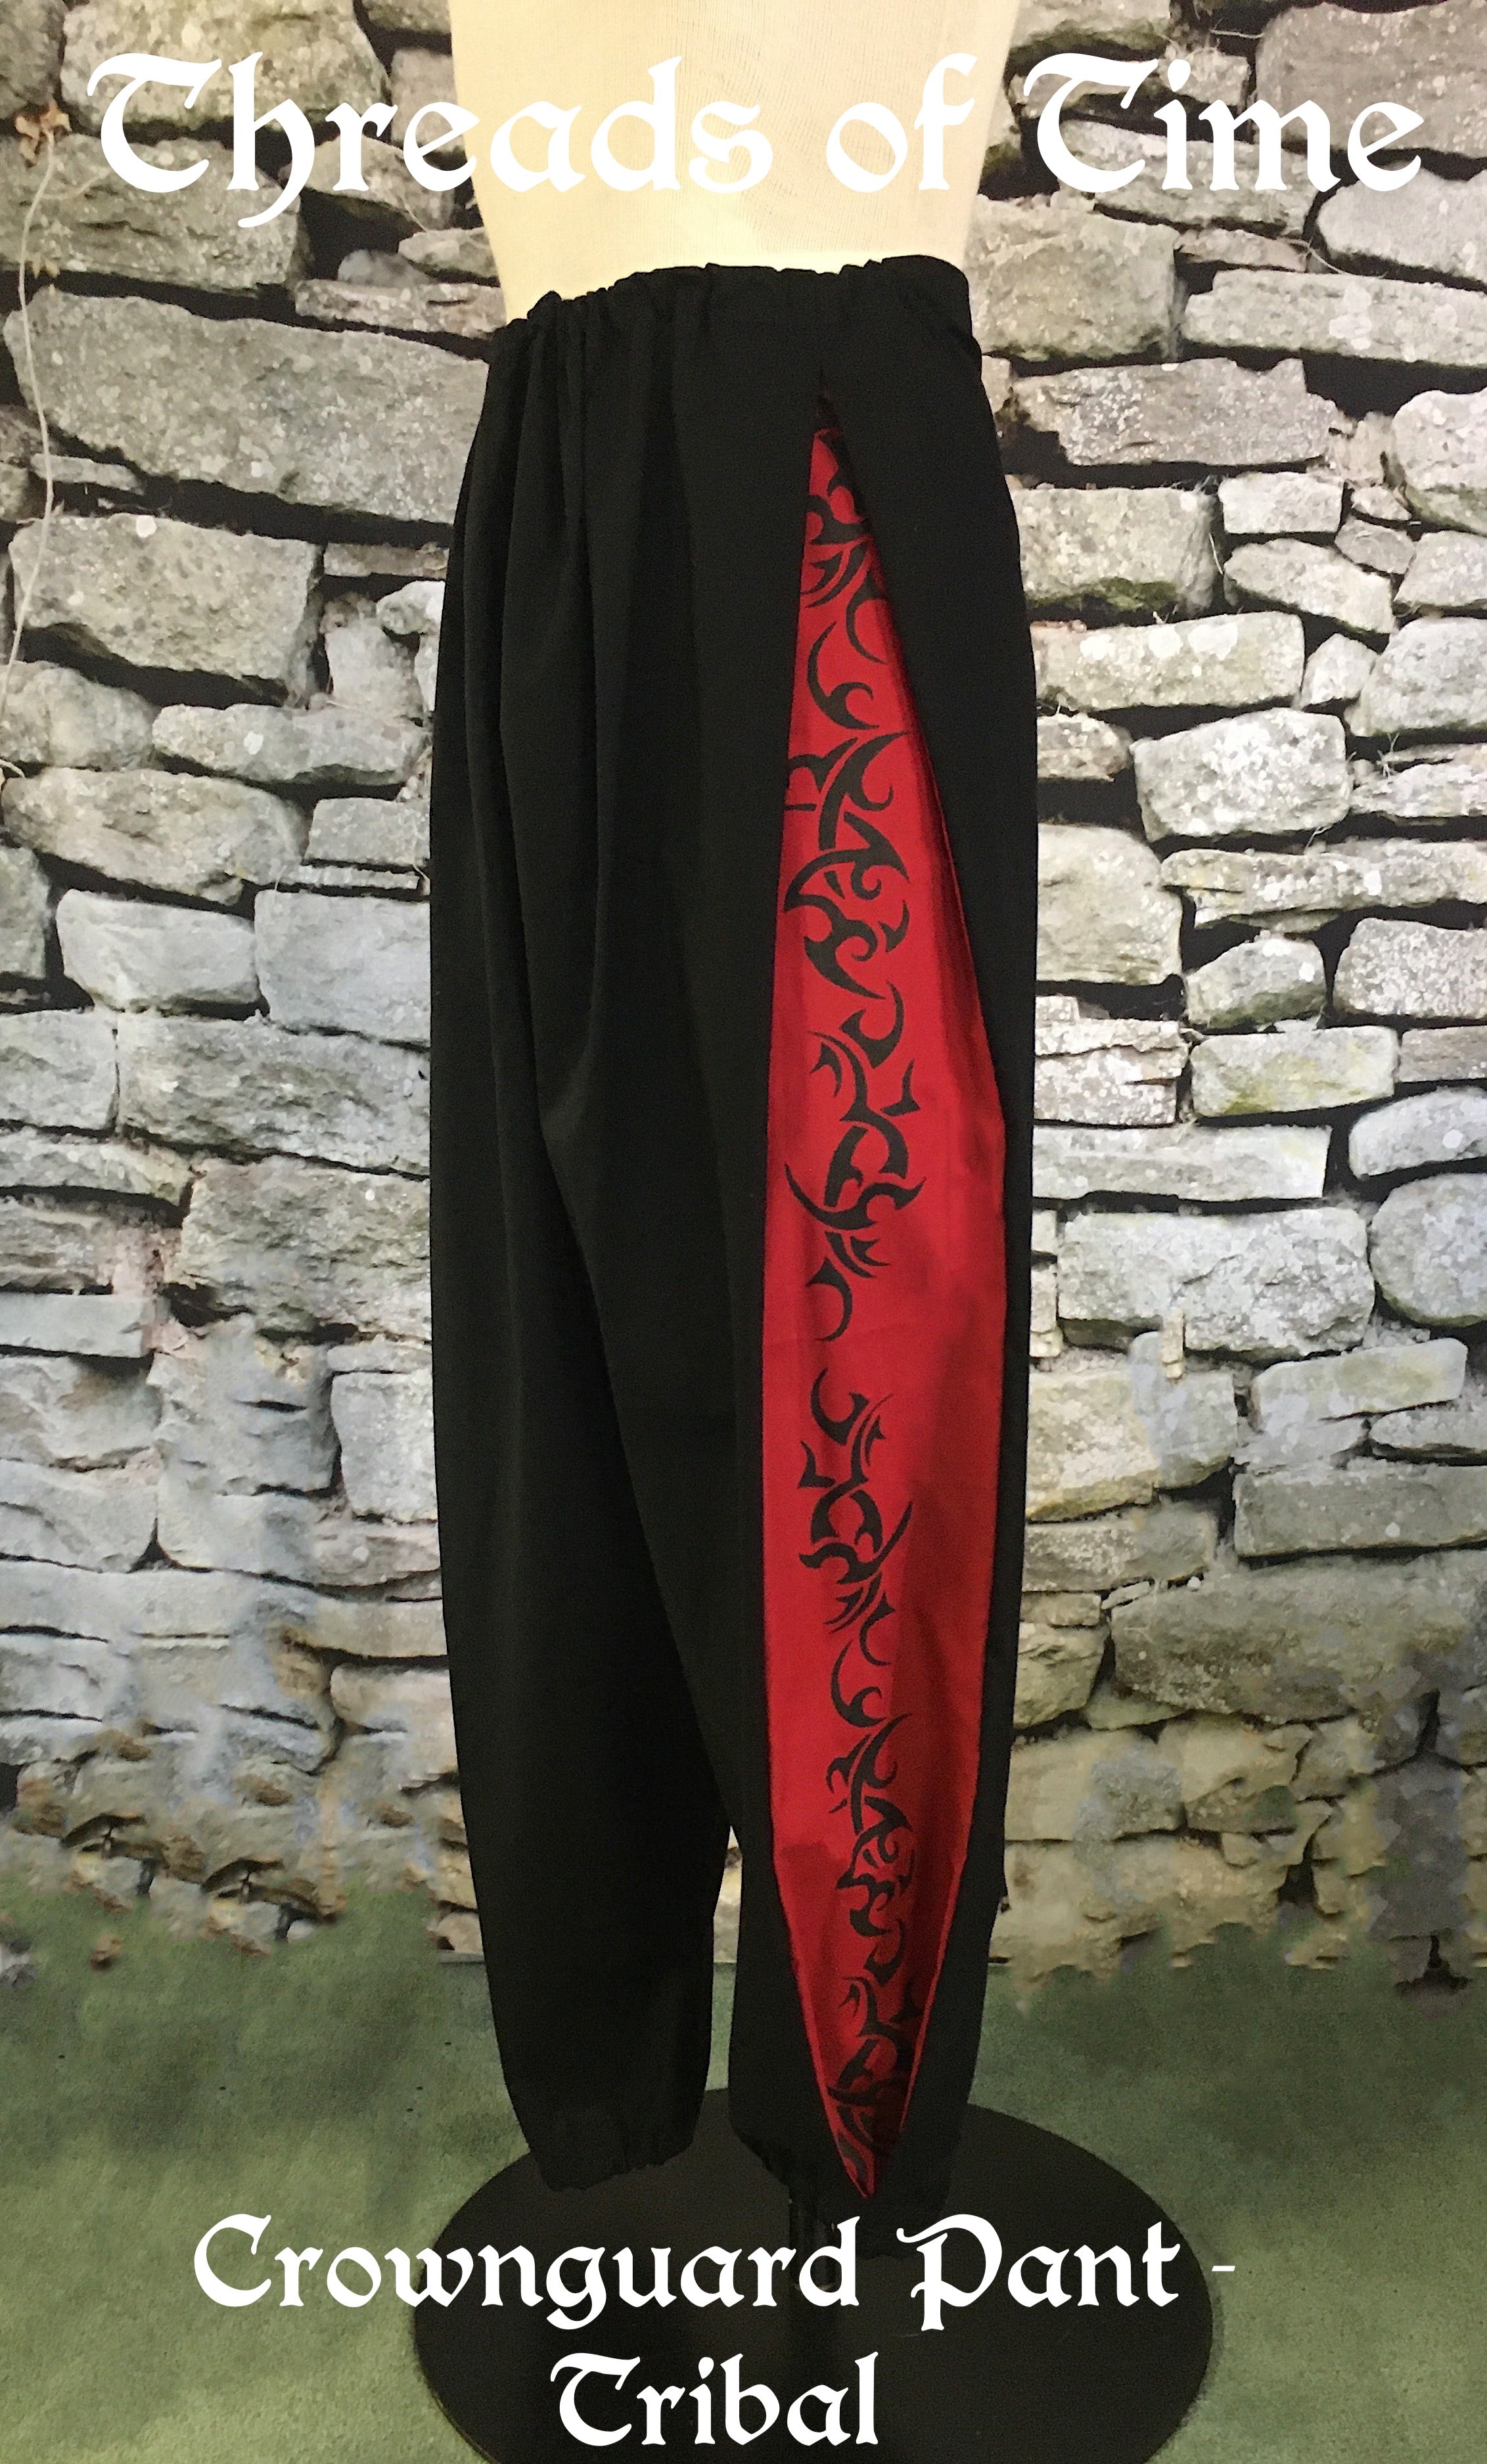 Crownguard Pants | Plain, Tribal, Ancient Stone & Celtic Pants | Threads of Time